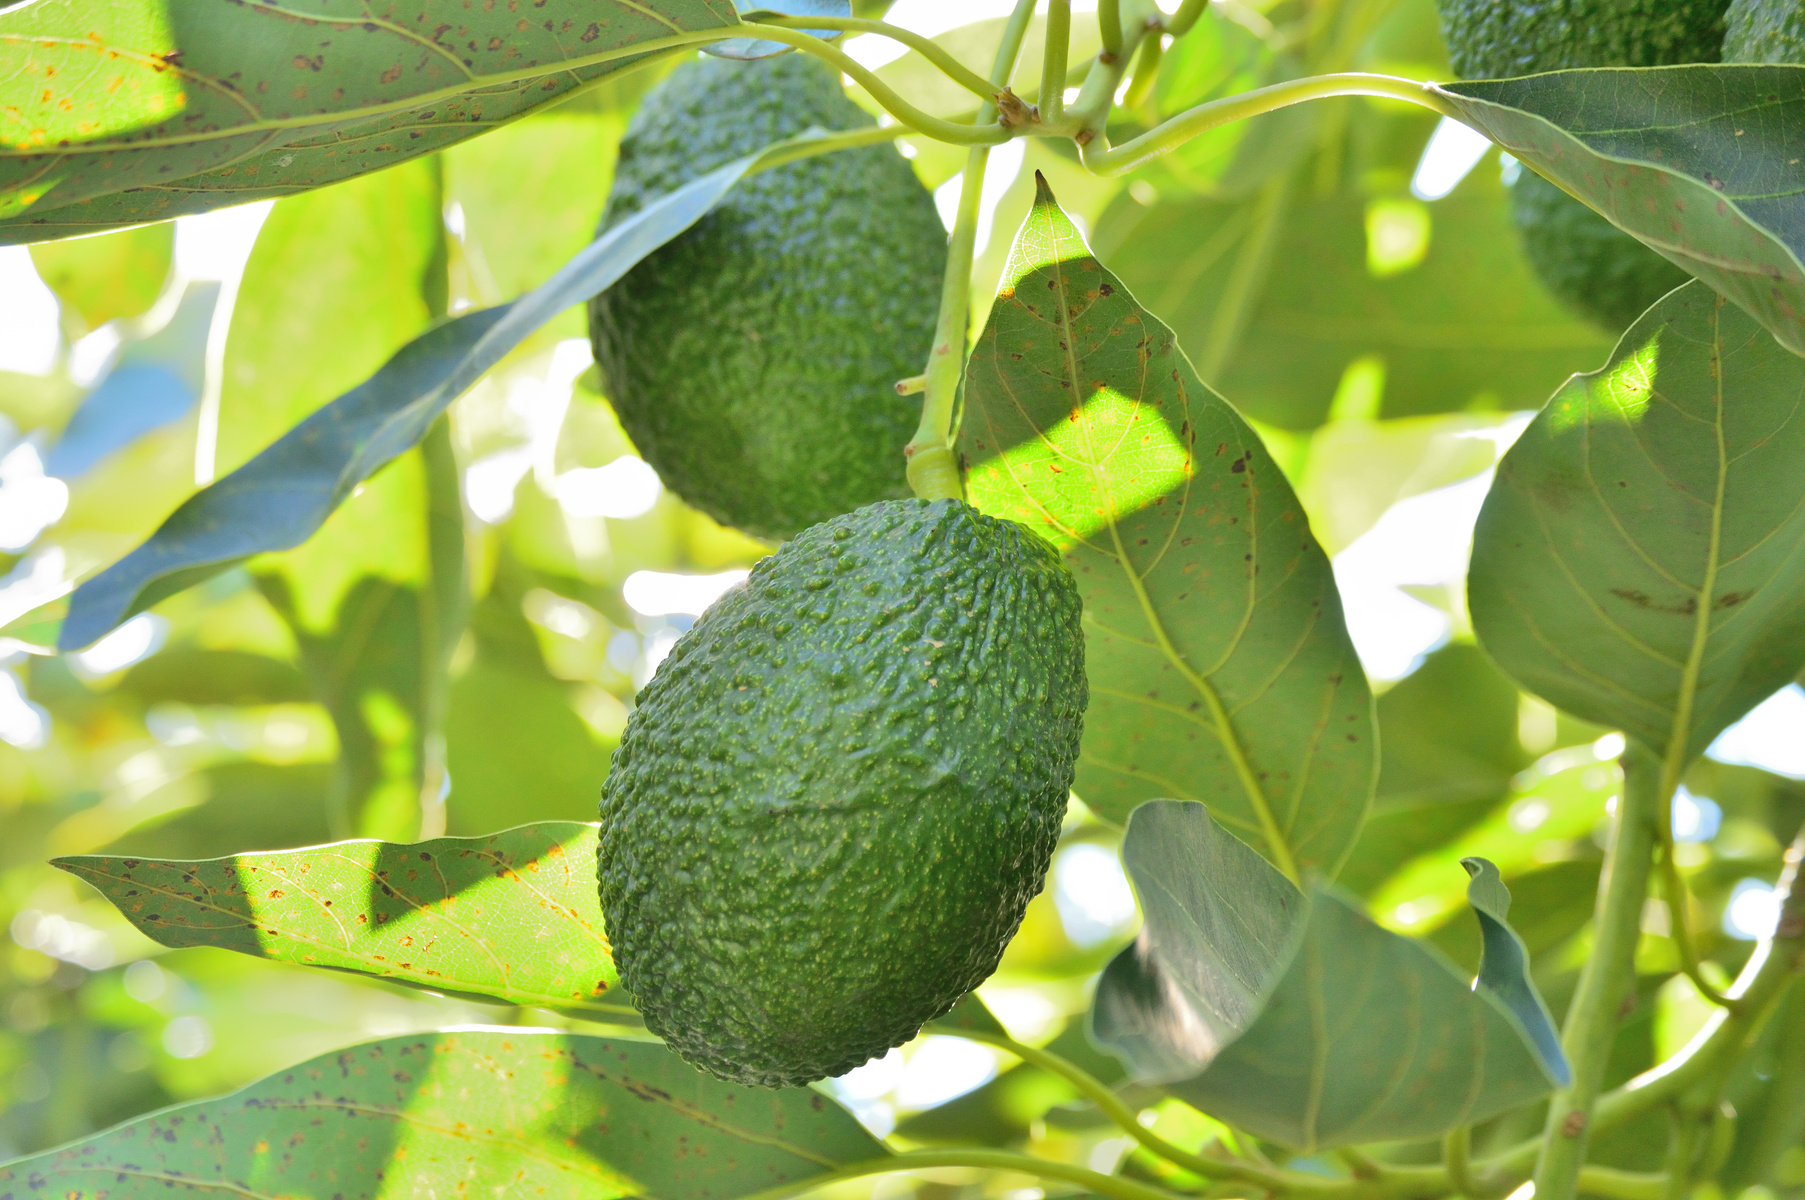 Hass avocados in avocado tree